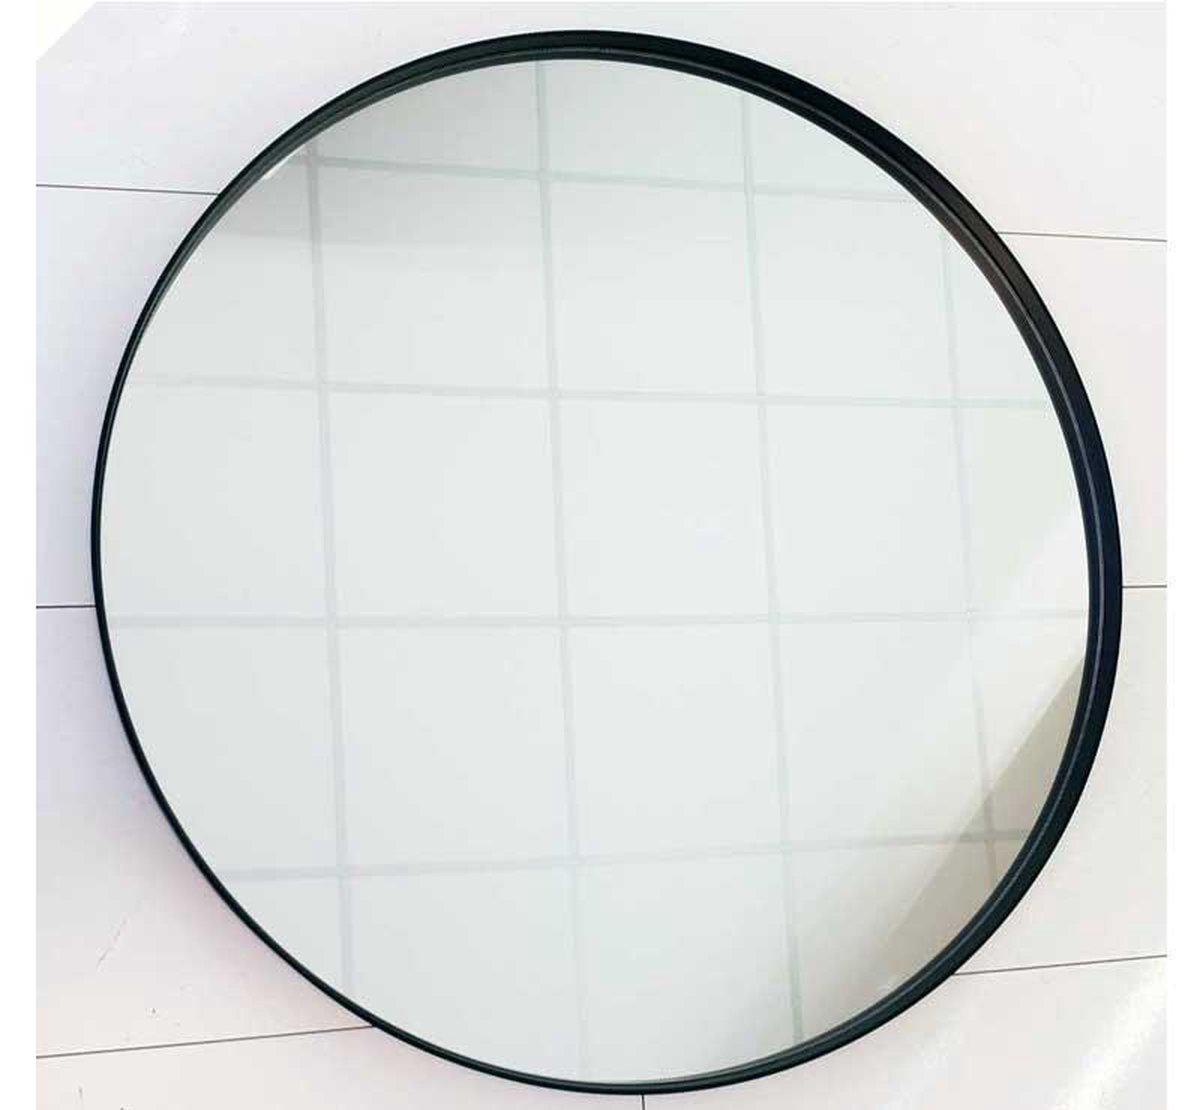 Ronde badkamerspiegel met mat zwart frame 60x60 cm